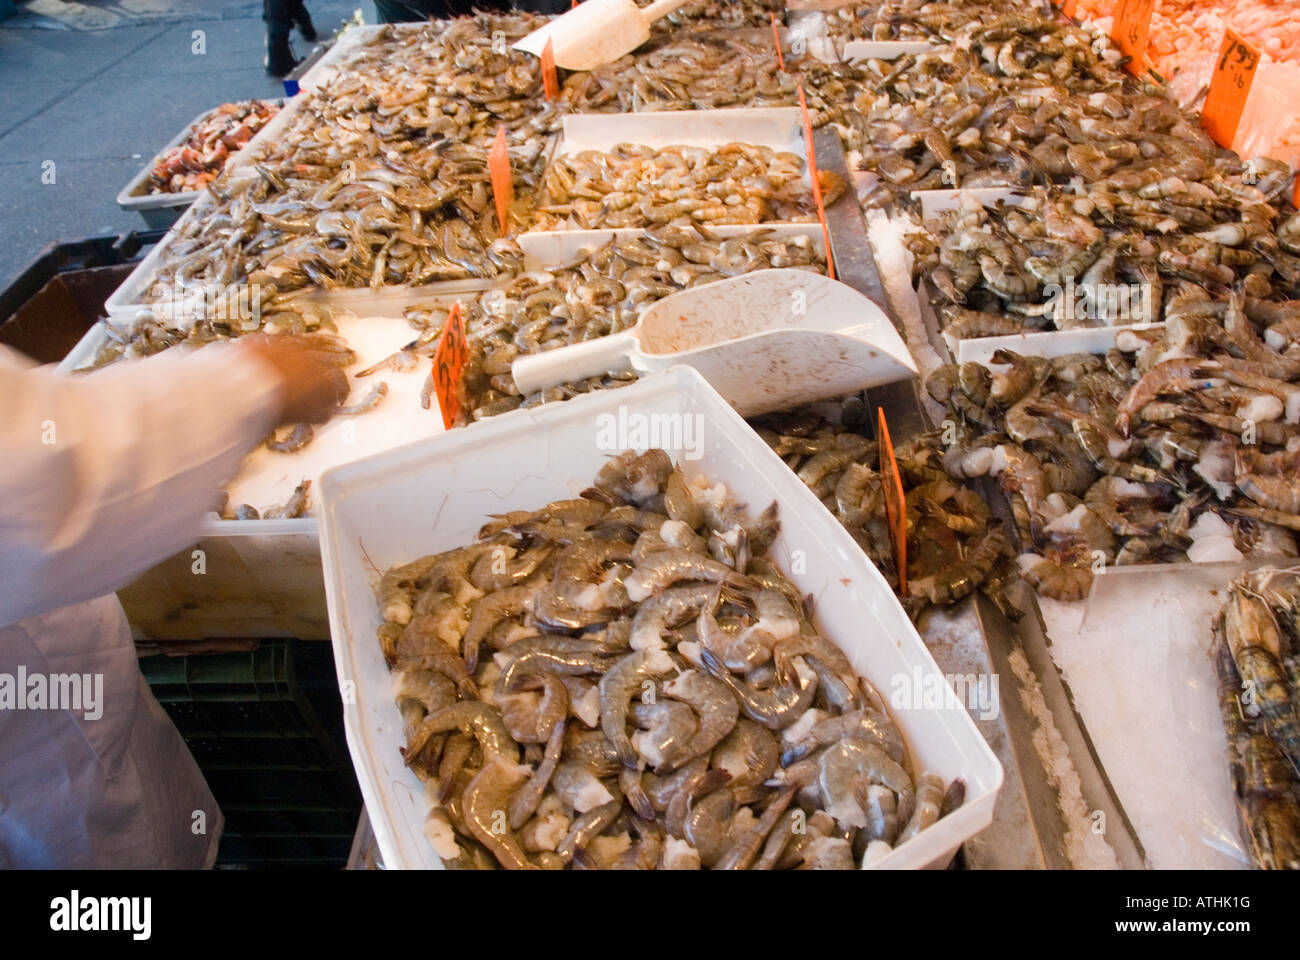 Outdoor fish market in Chinatown, New York City Stock Photo